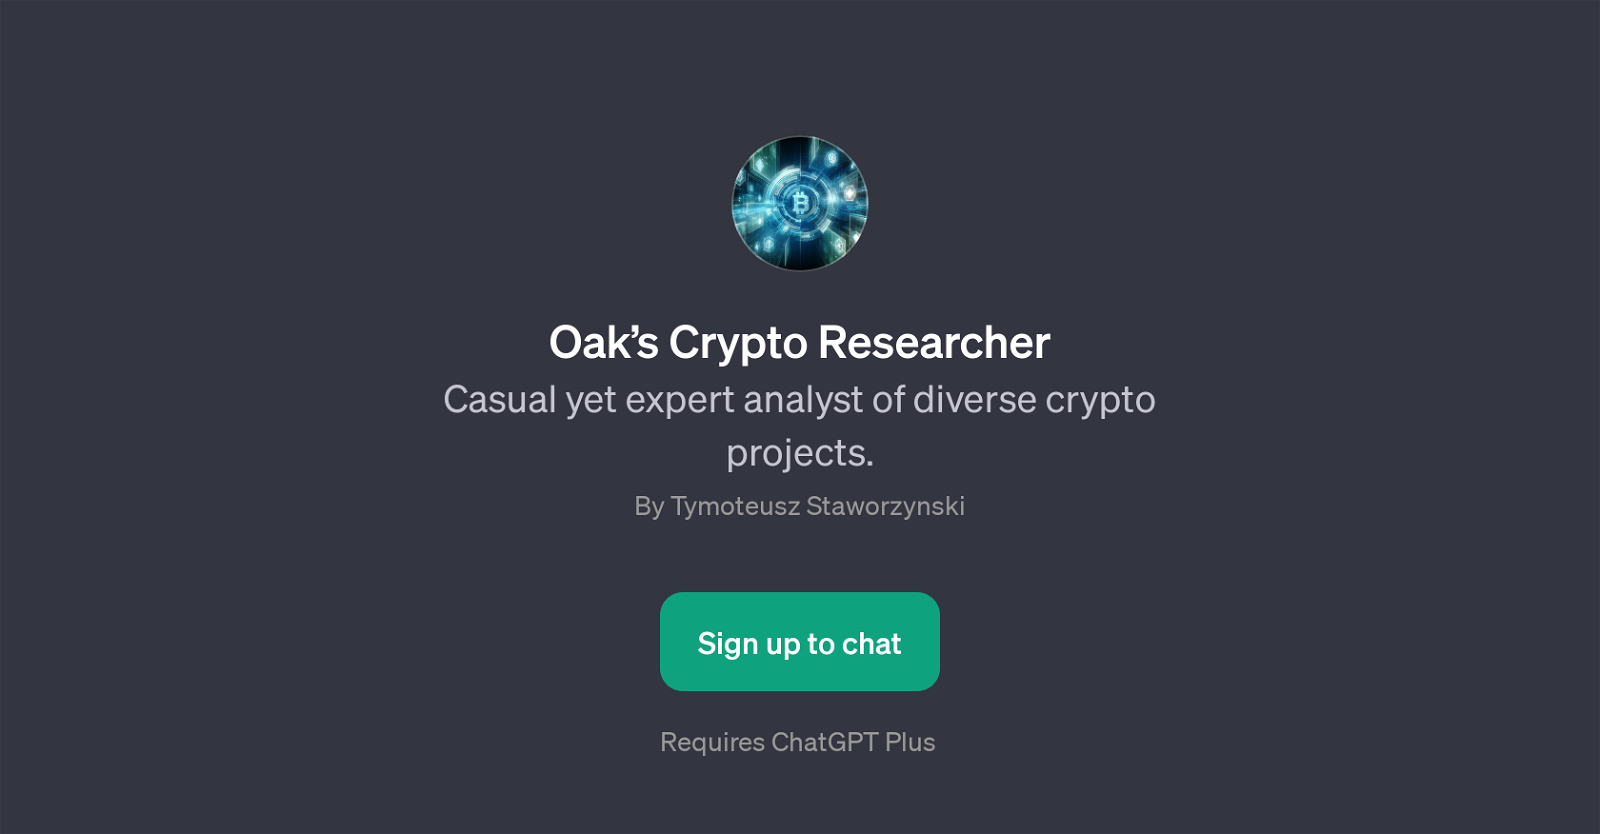 Oaks Crypto Researcher website